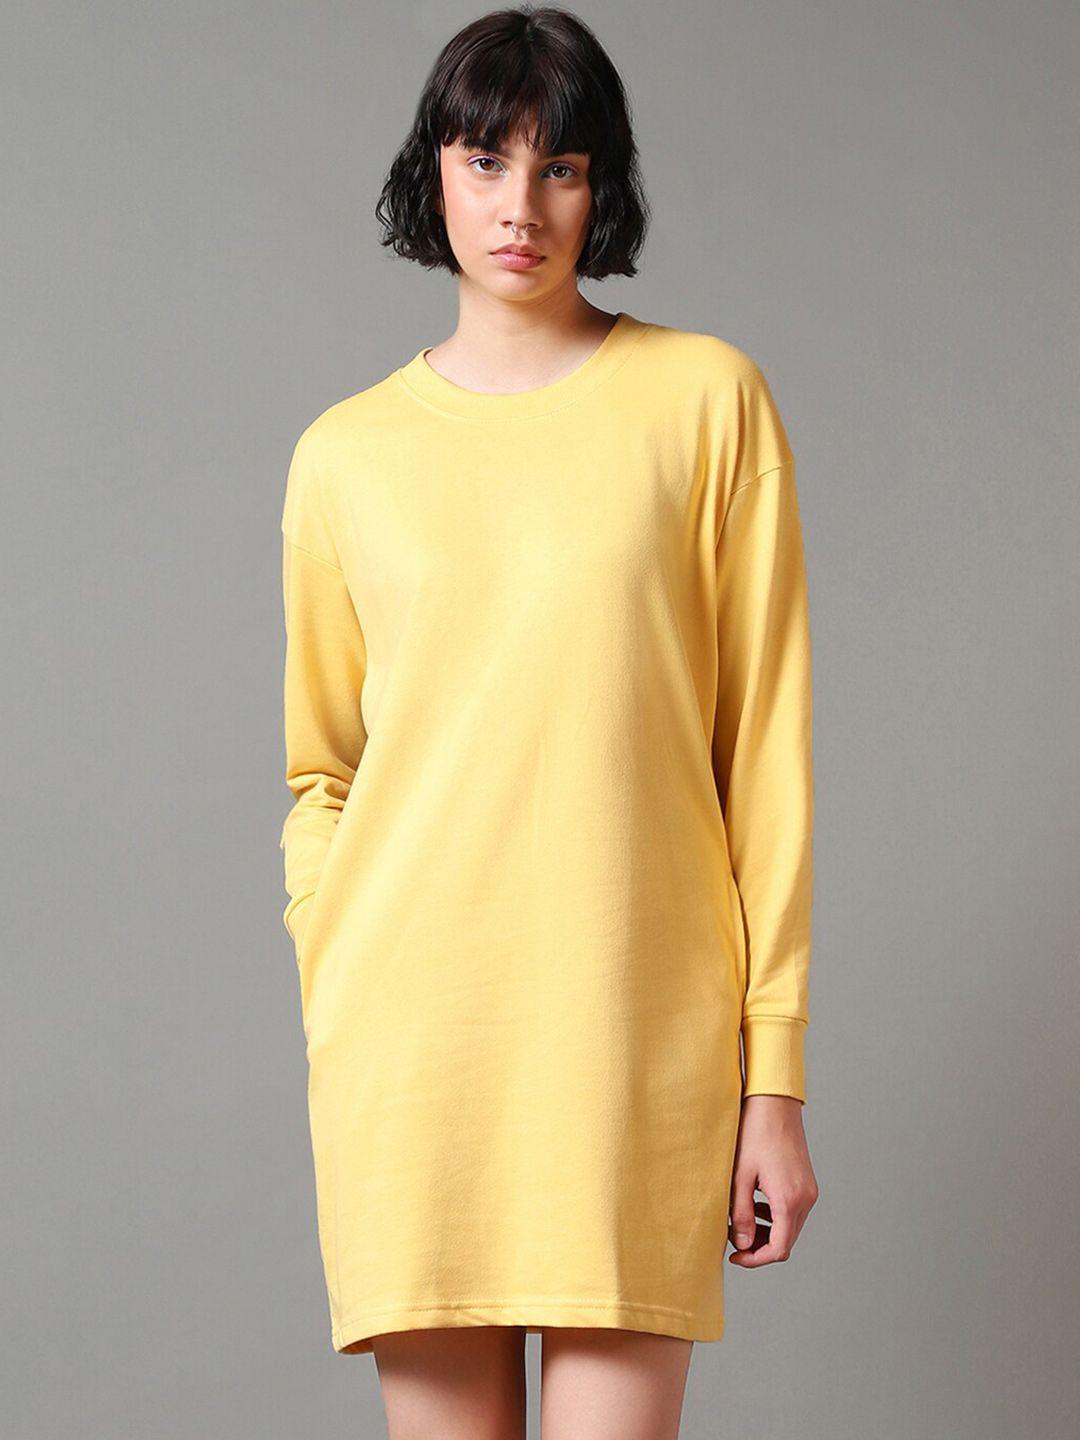 bewakoof yellow long sleeves t-shirt dress